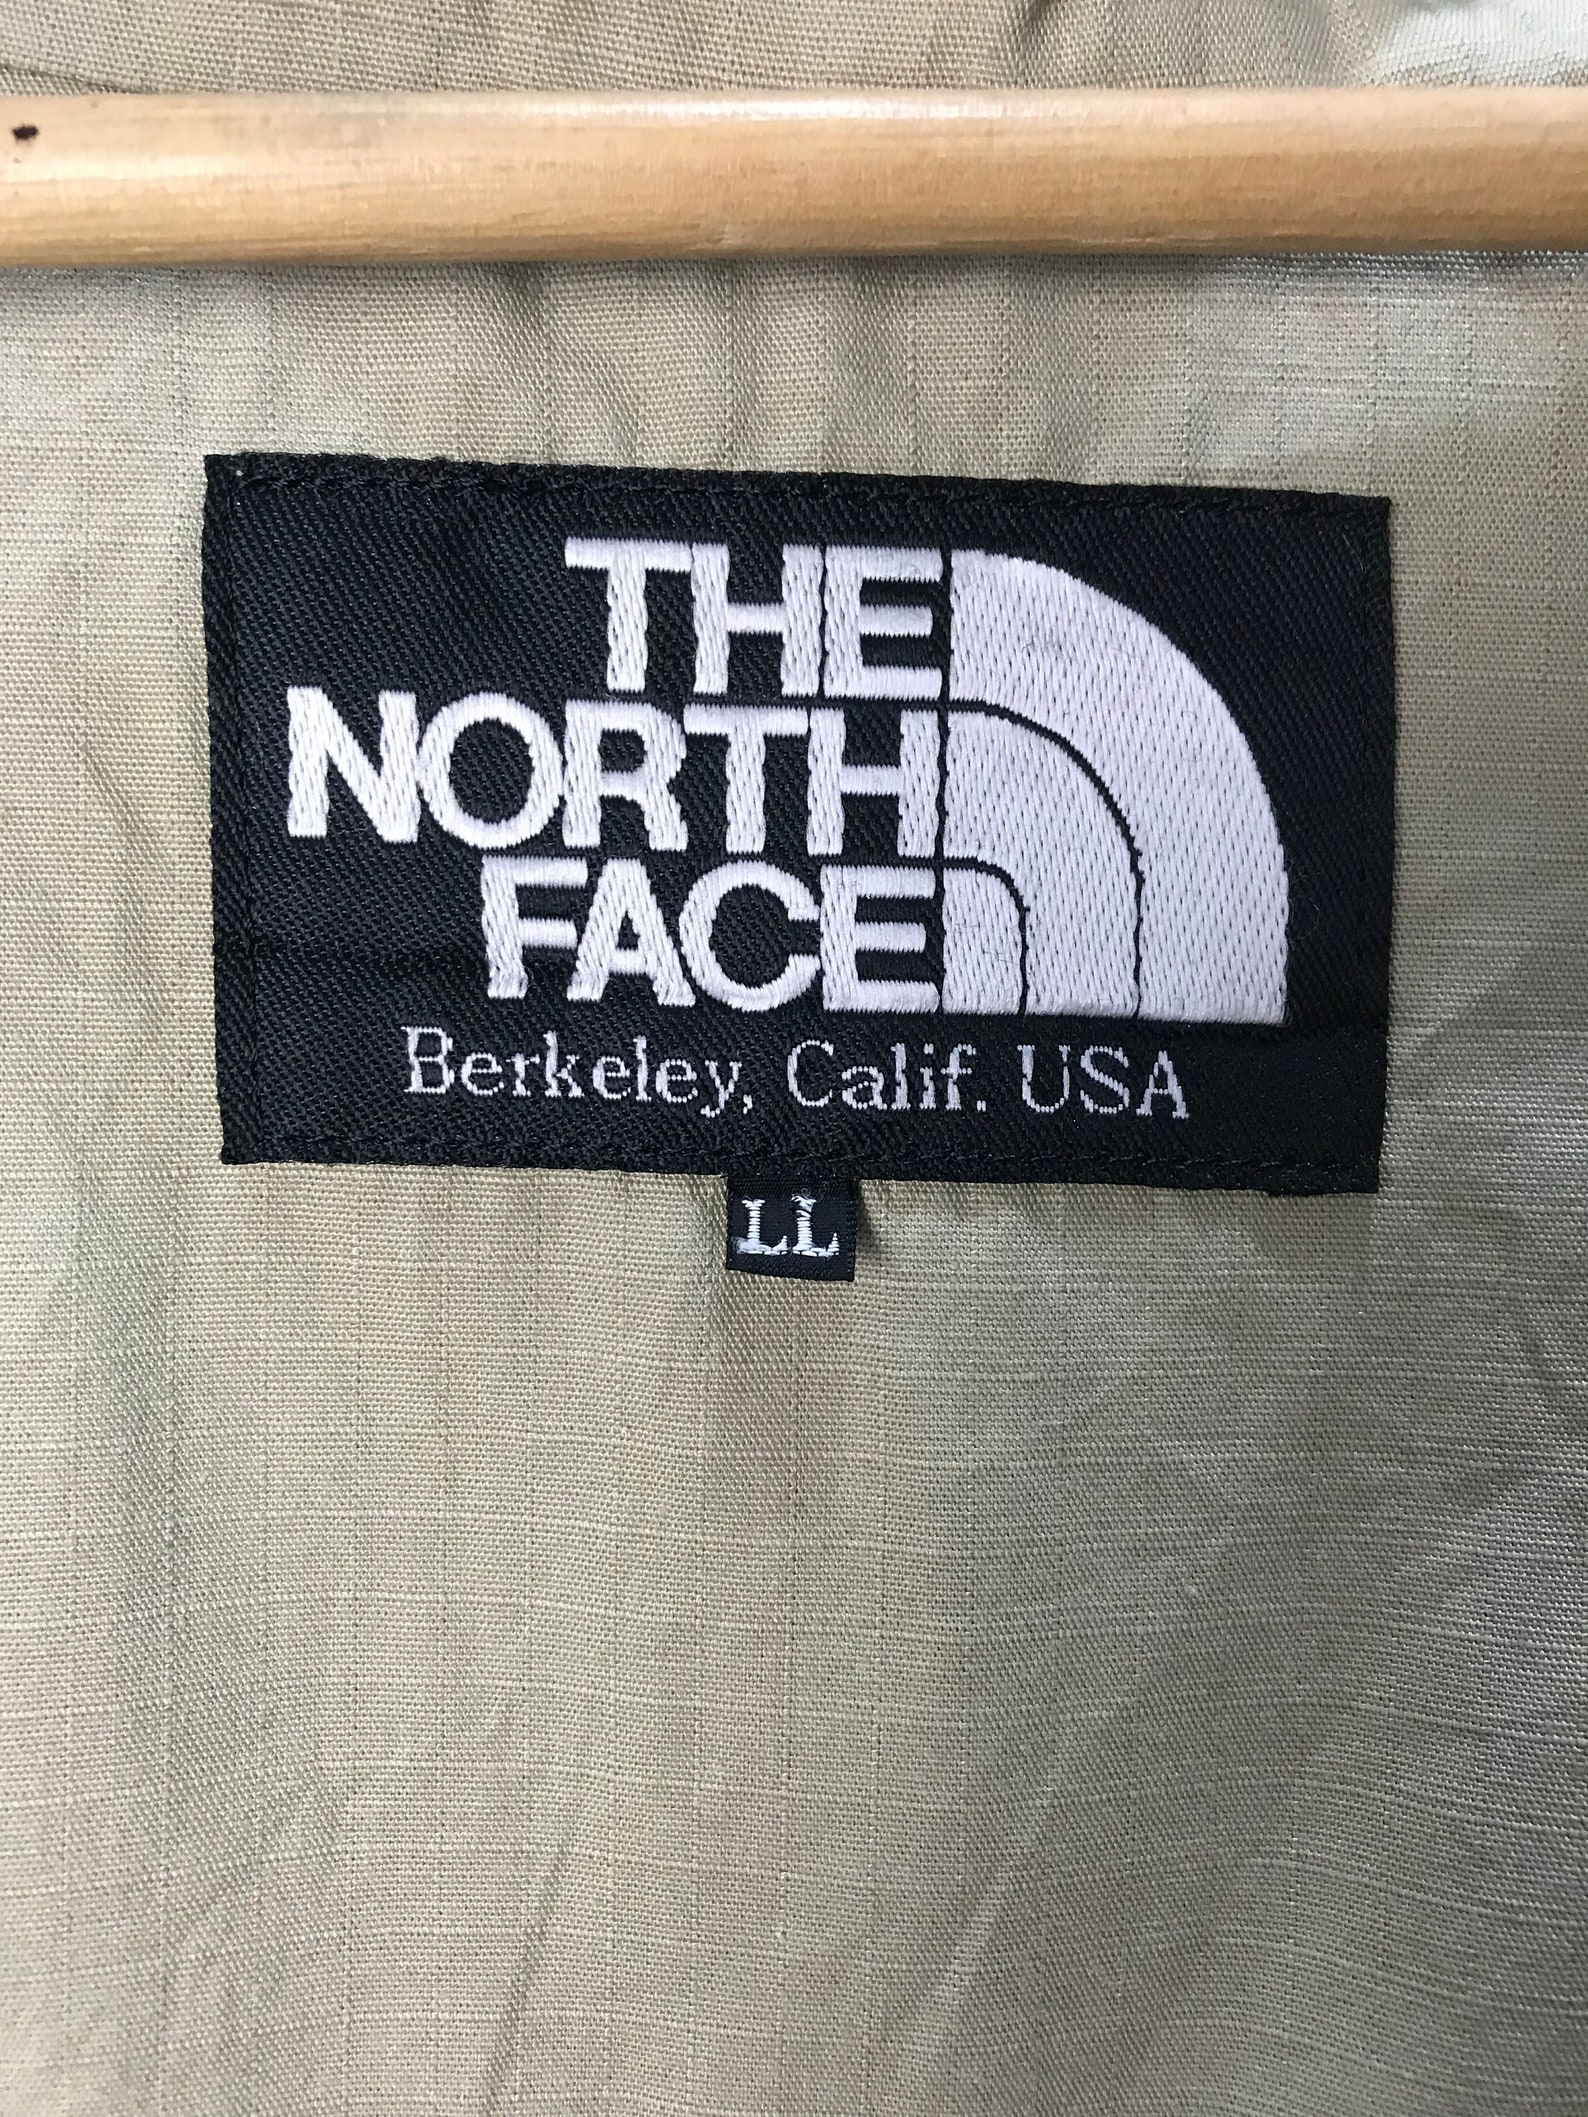 Vintage the North Face Berkeley Calif USA Jacket - Etsy